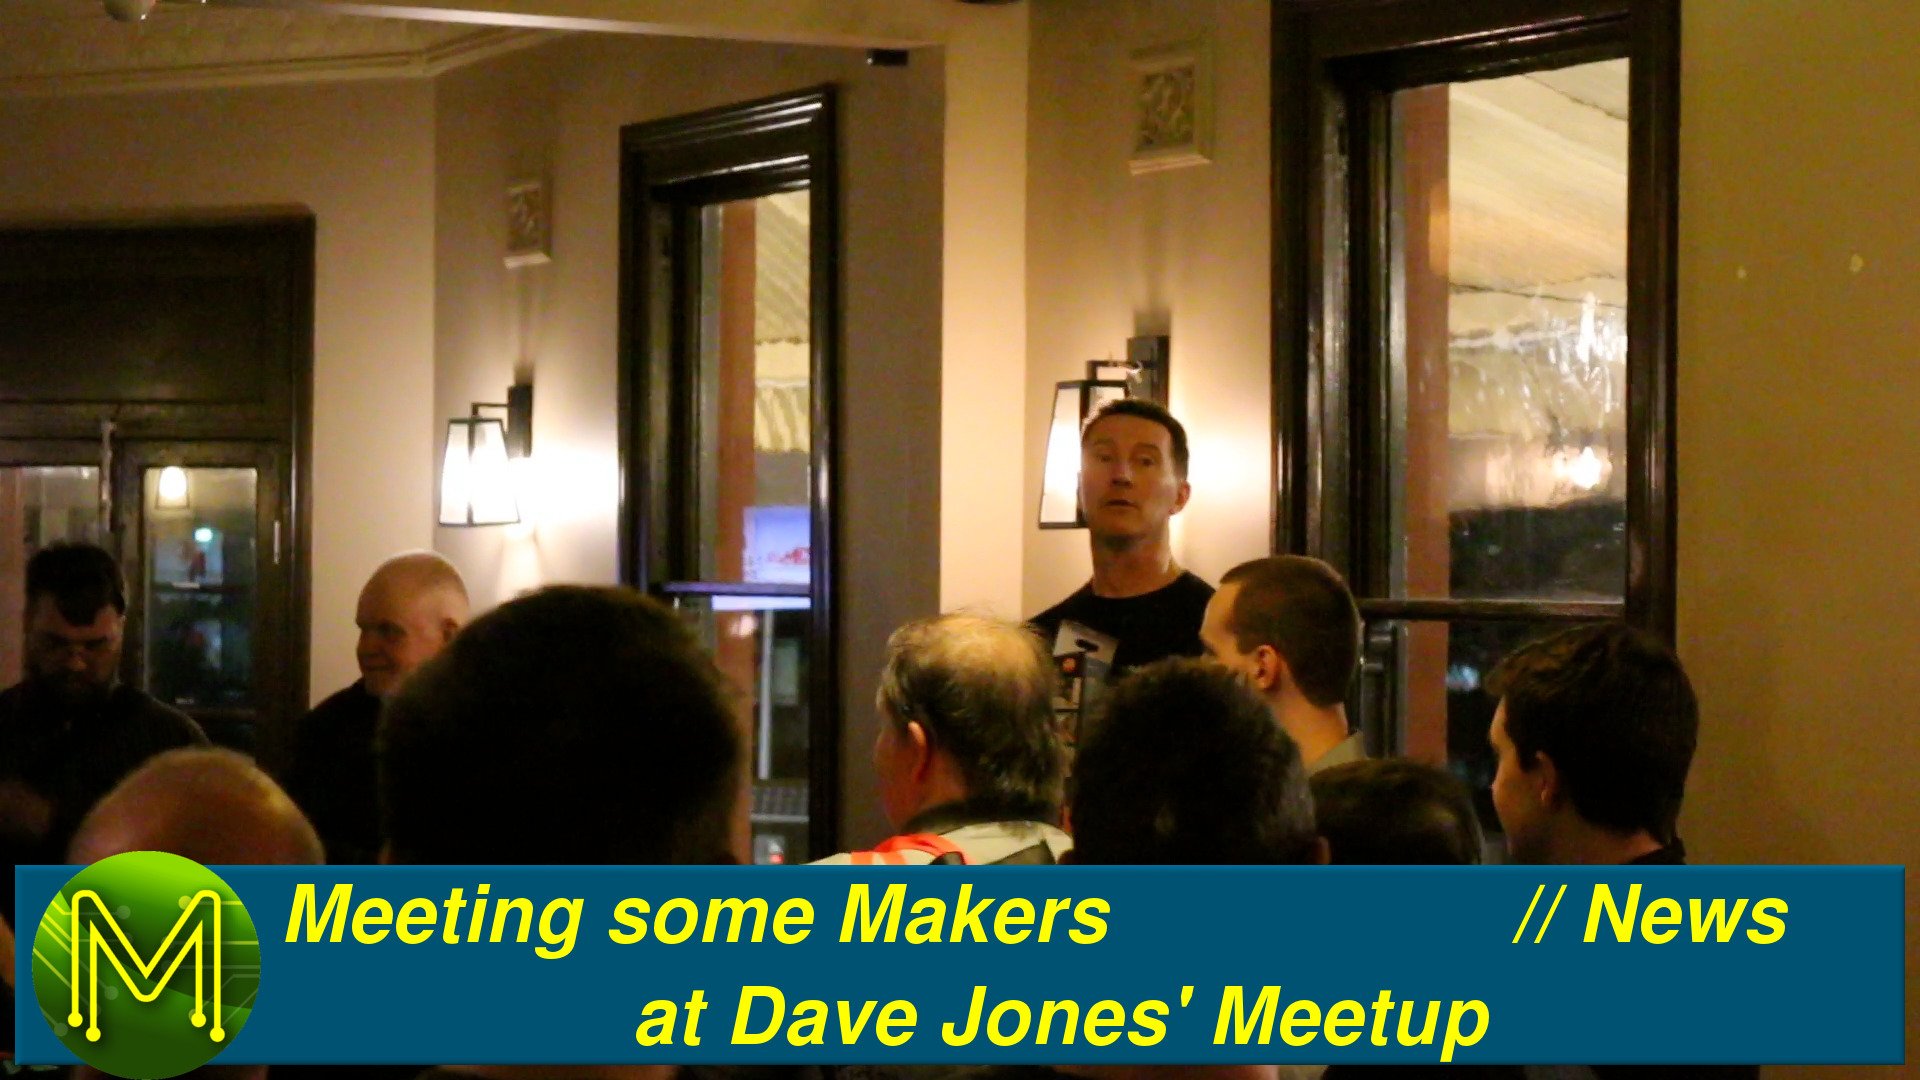 Meeting some Makers at Dave Jones' Meetup - News